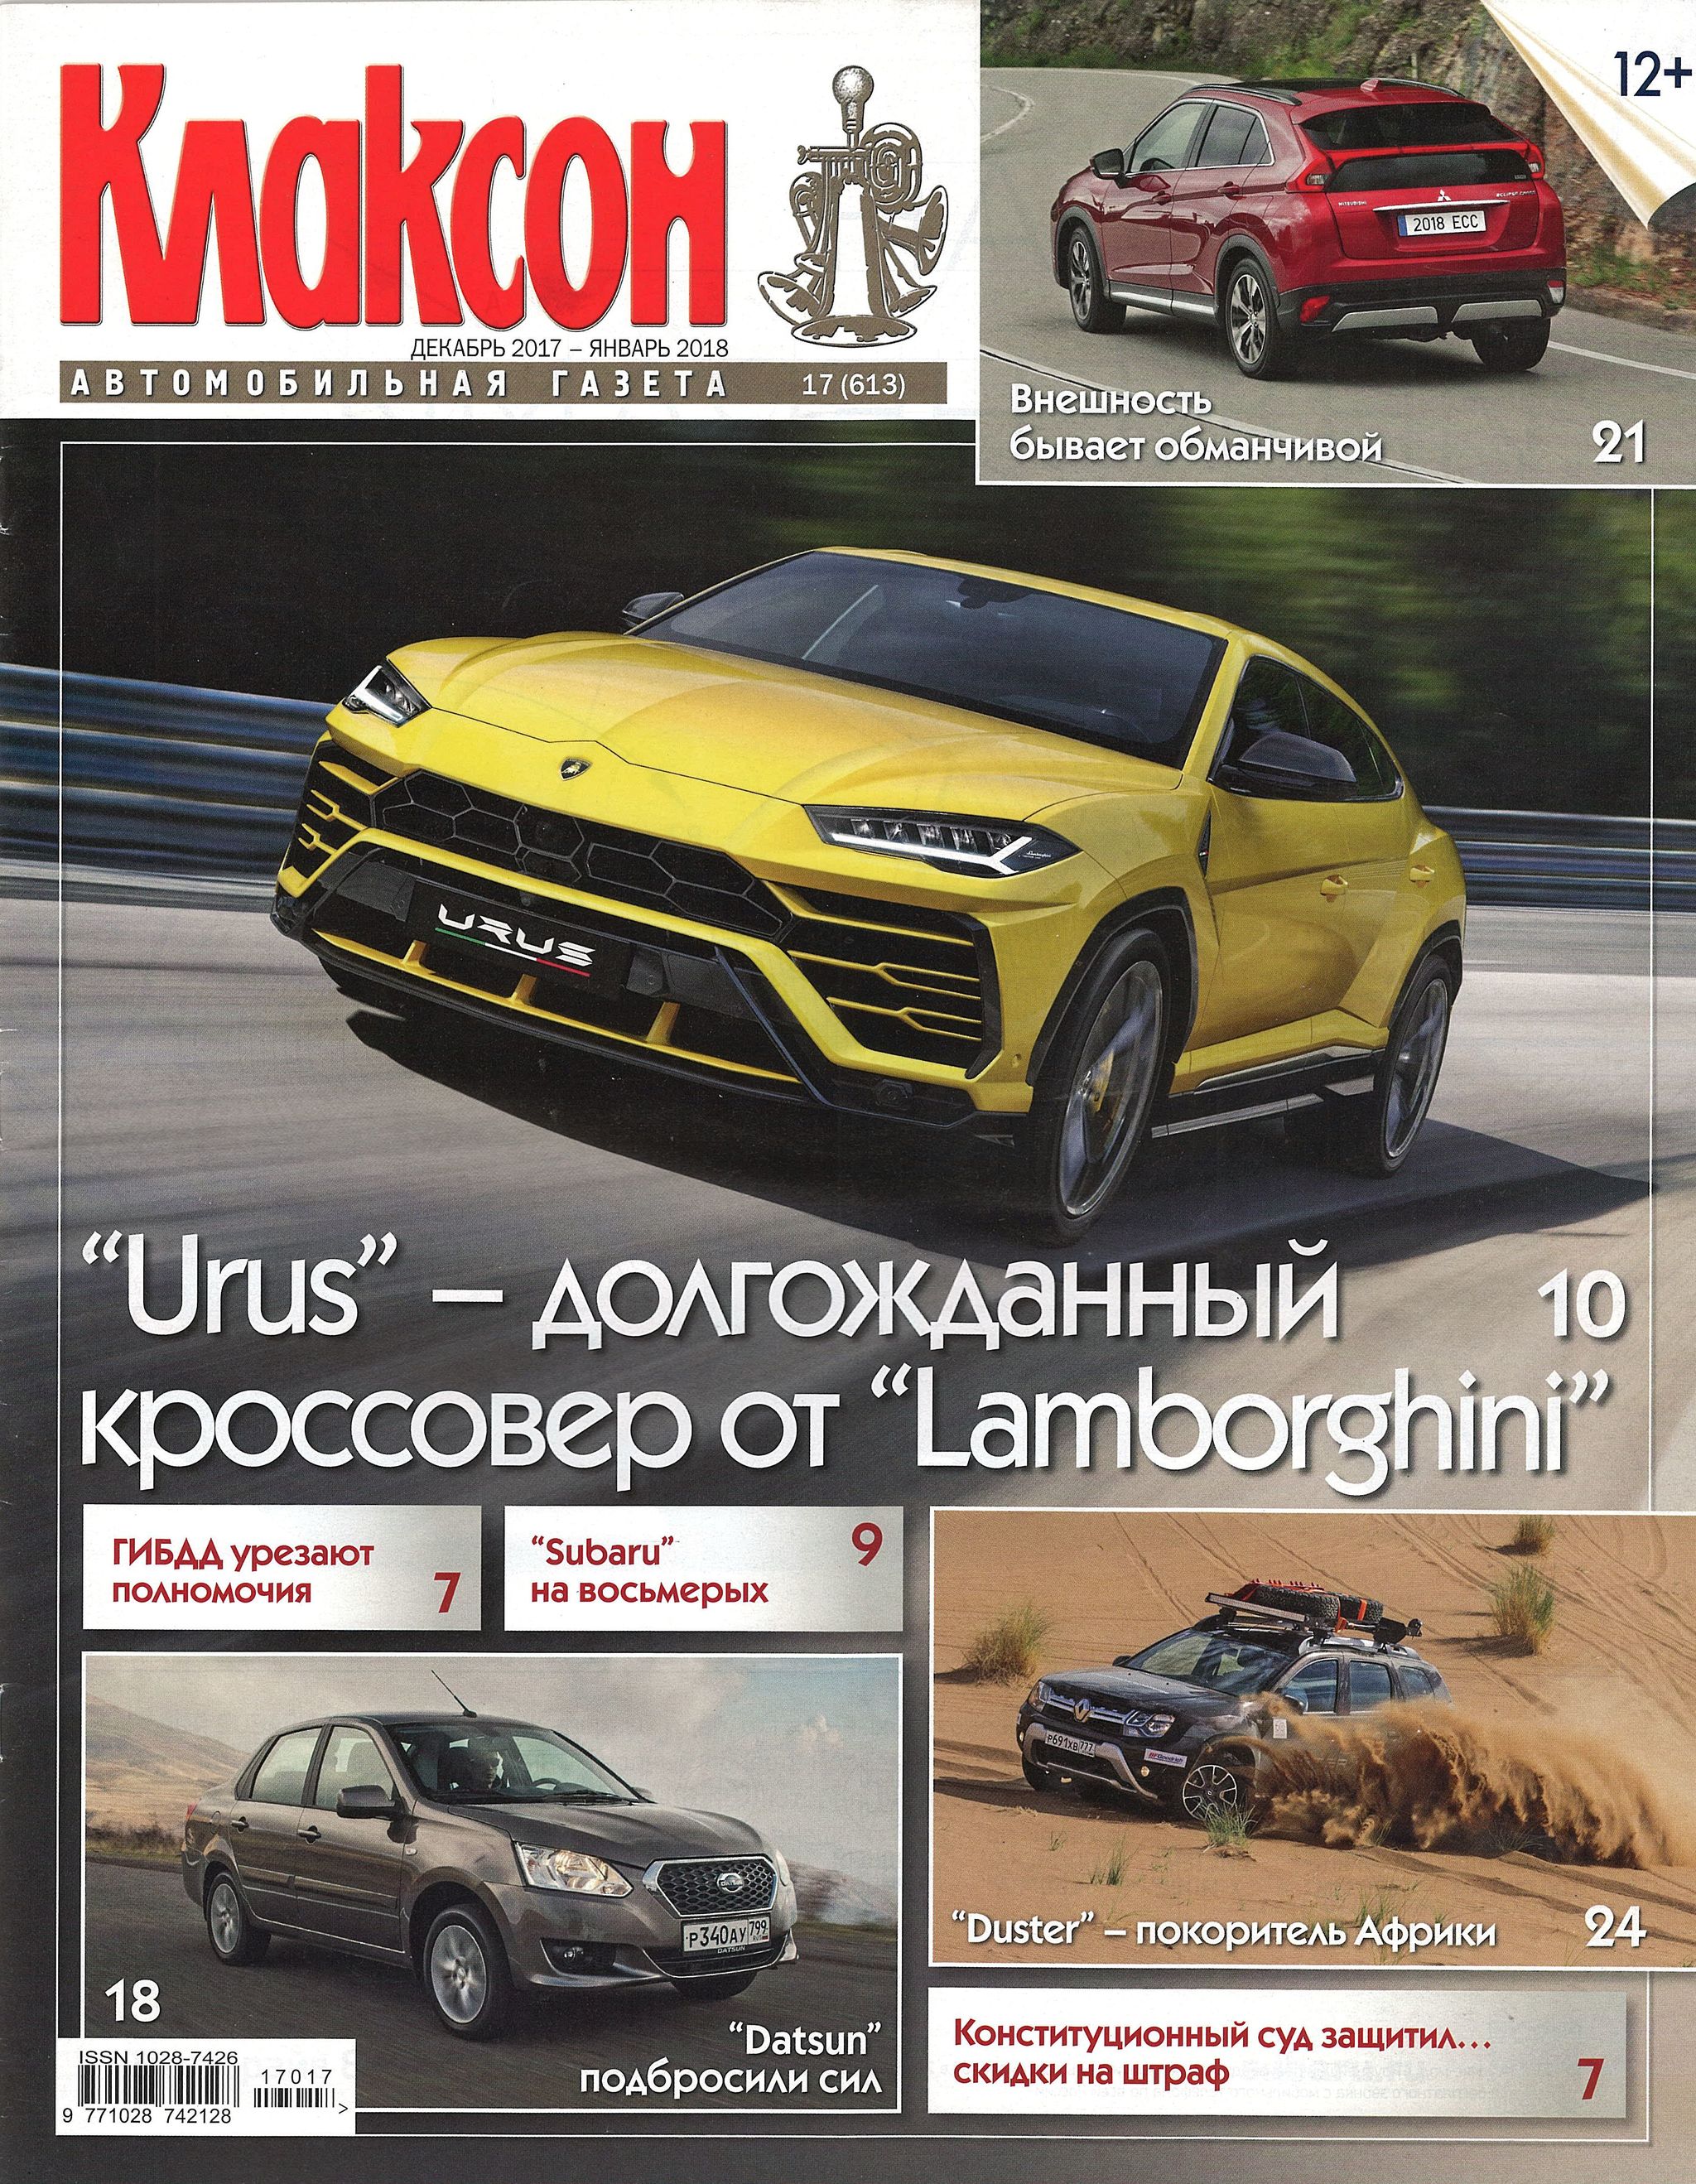 Klaxon newspaper. Year 2017 - Klaxon, Magazine, Newspapers, Auto, Longpost